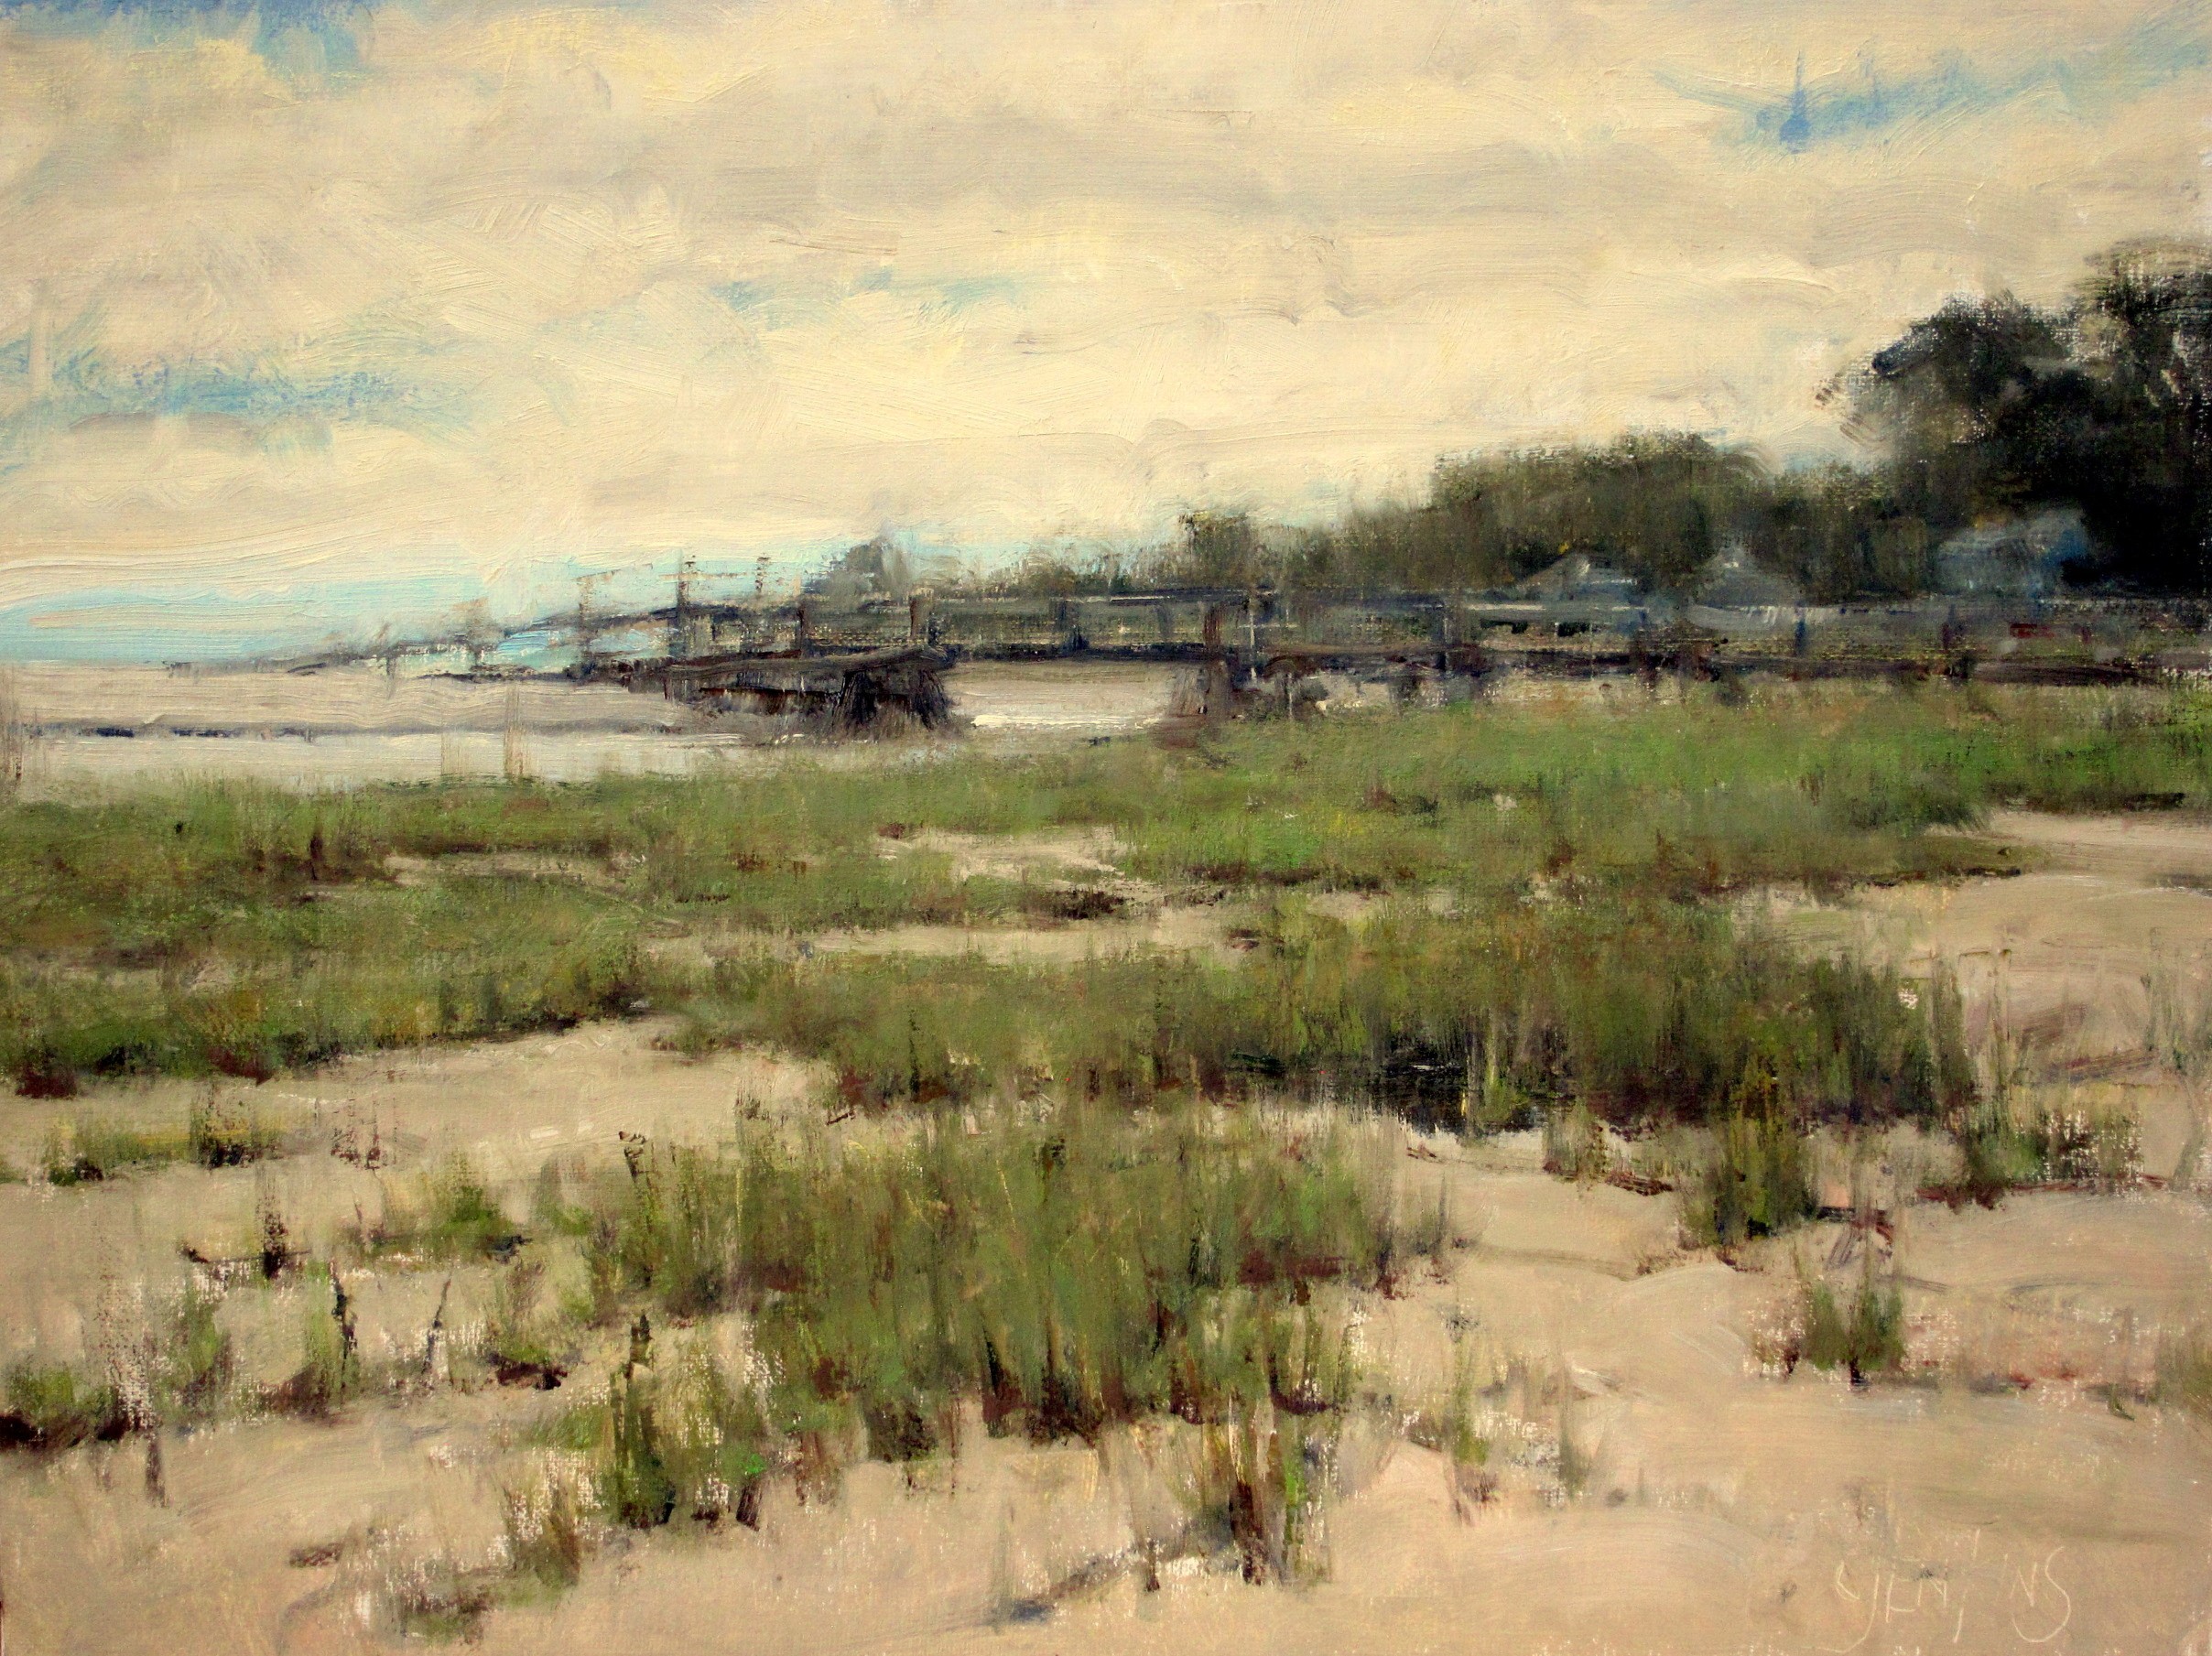 Jenkins, Carol, On the Coast, 11 x 14 $1400 oil on canvas